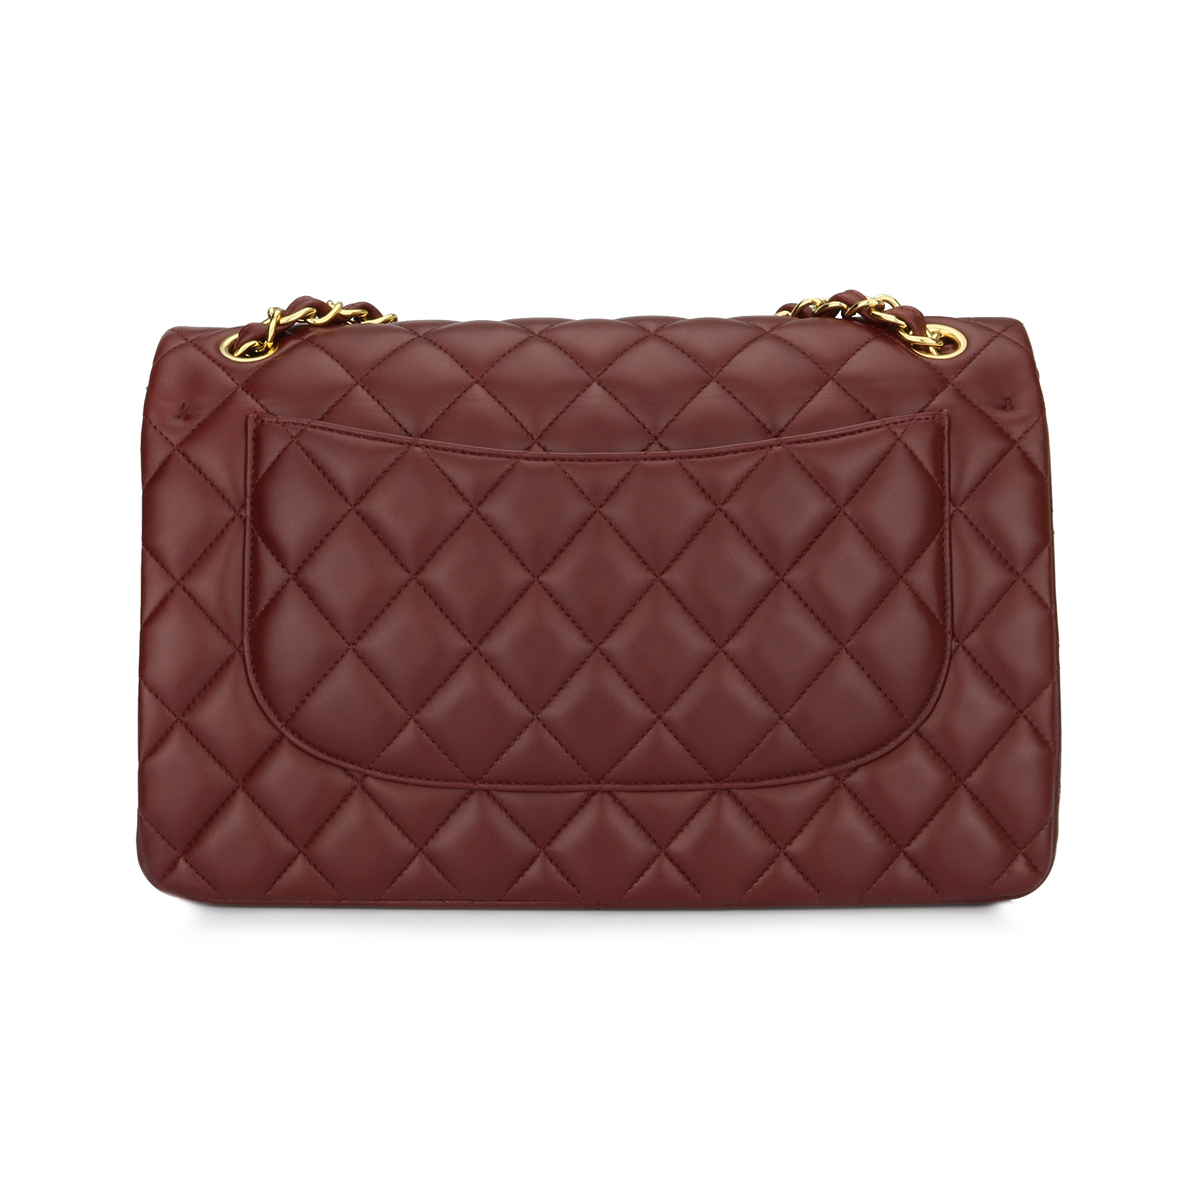 Chanel 2015 Bag - 144 For Sale on 1stDibs  chanel tote bag 2015, chanel  limited edition bags 2015, chanel seasonal flap bag 2015